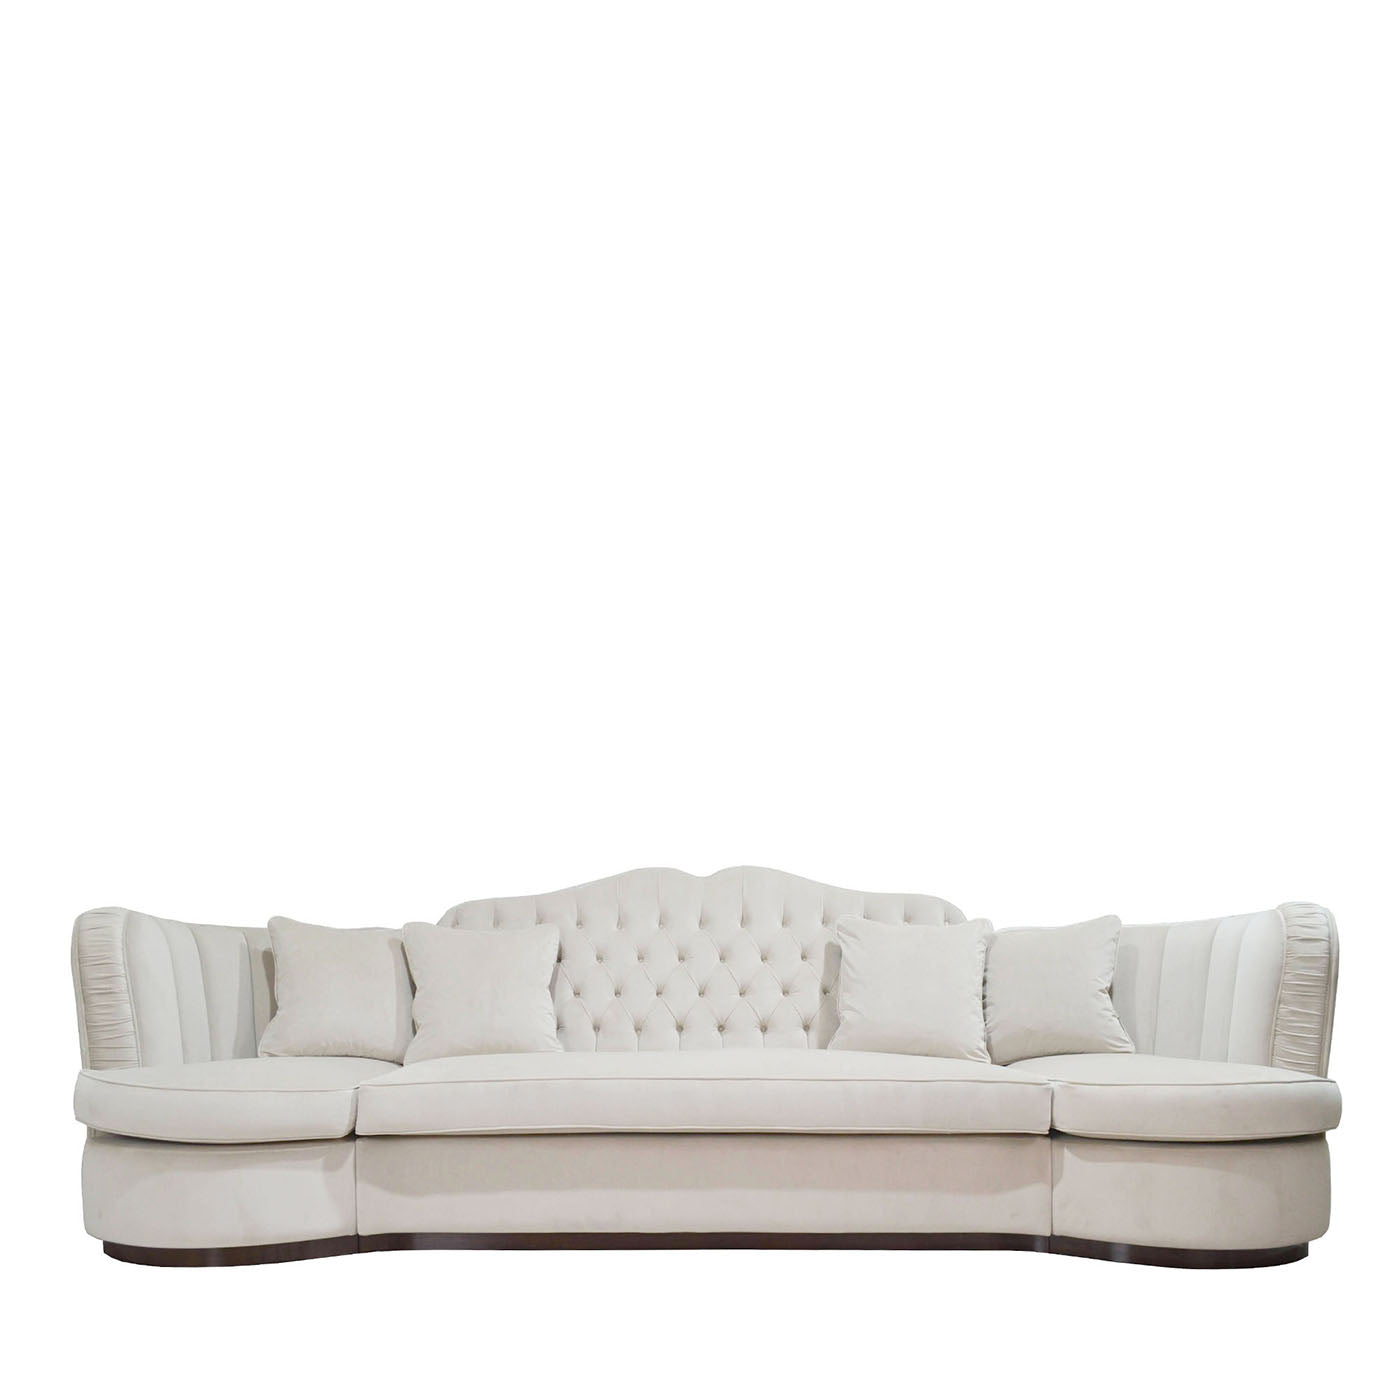 Italian Curved Modular Classic Sofa in Beige Velvet - Main view